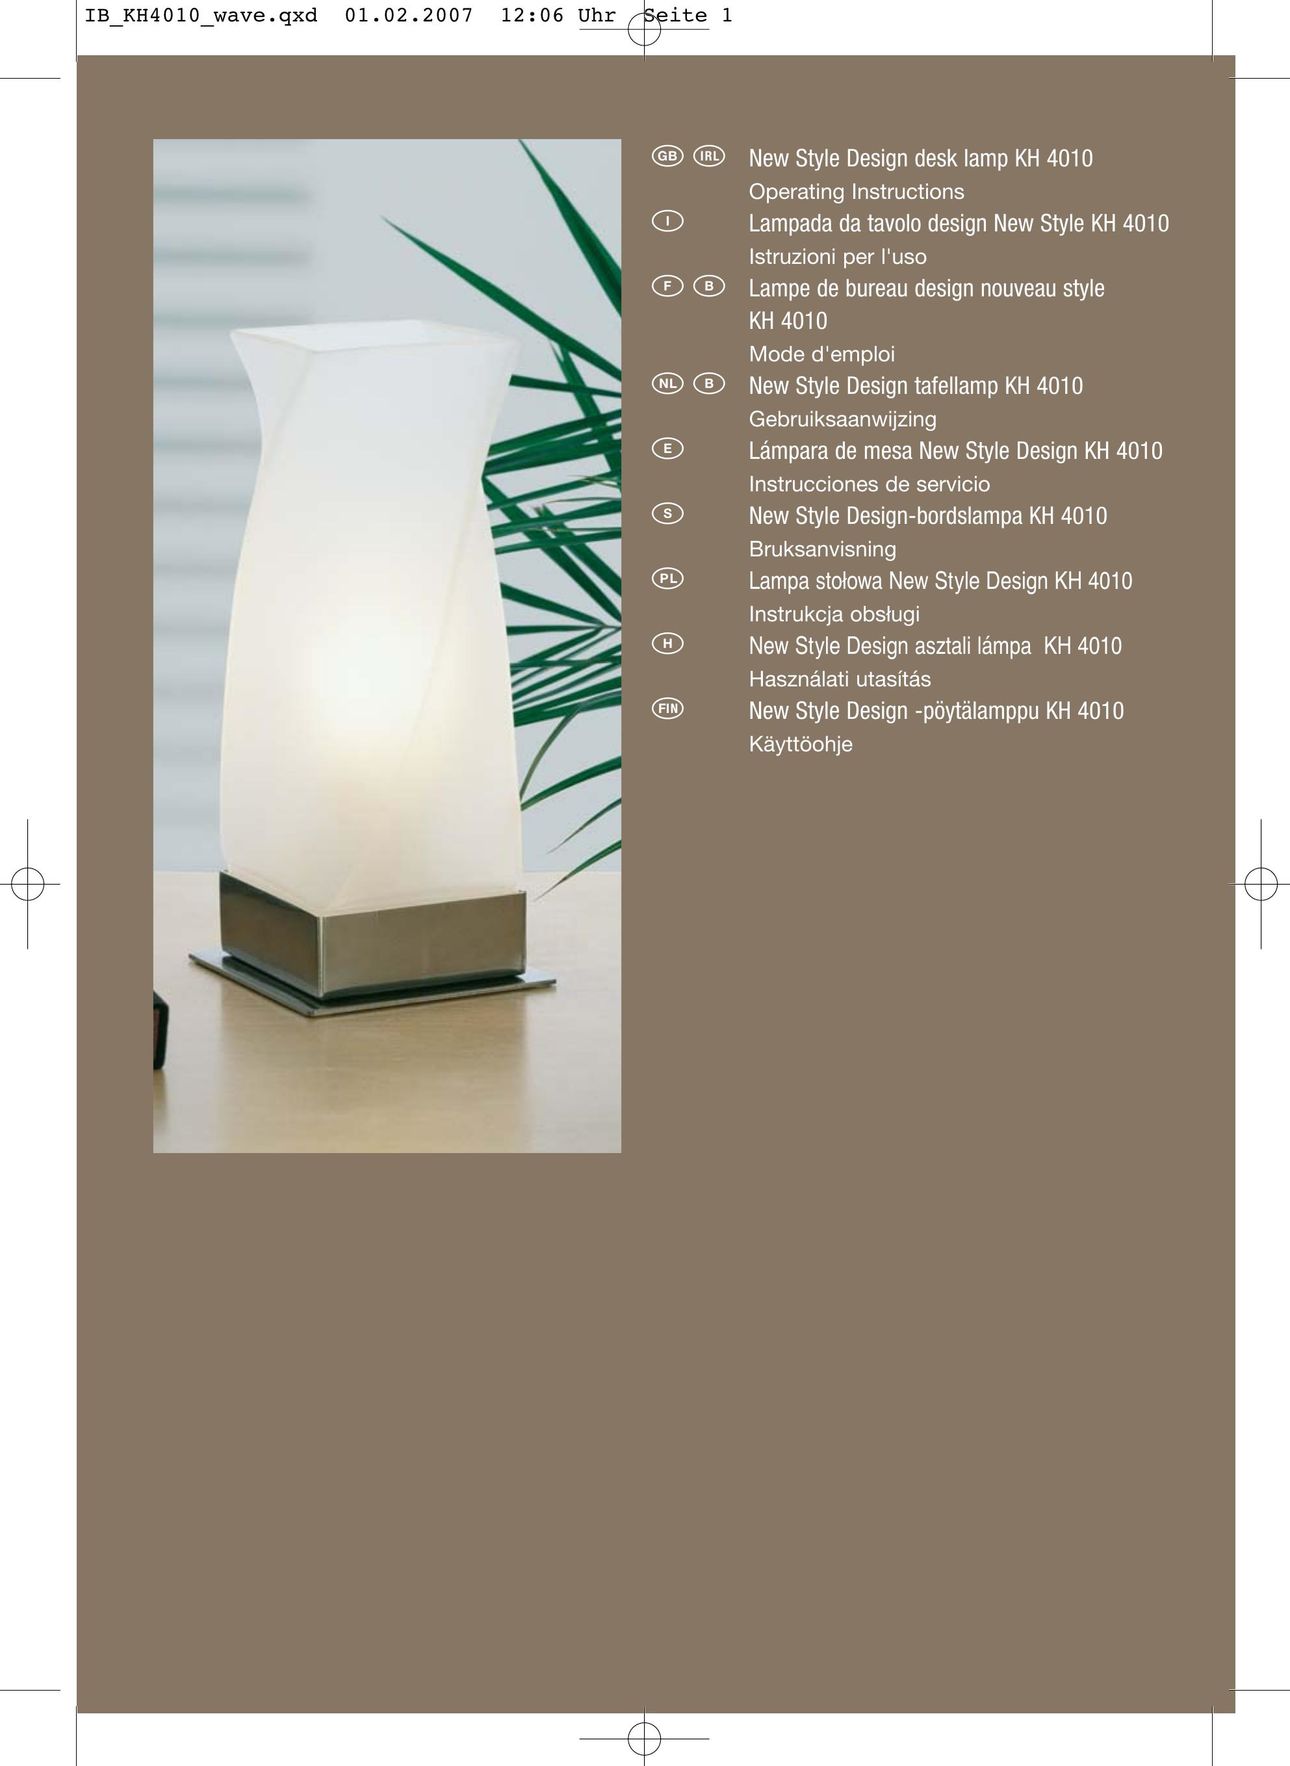 Kompernass KH 4010 Indoor Furnishings User Manual